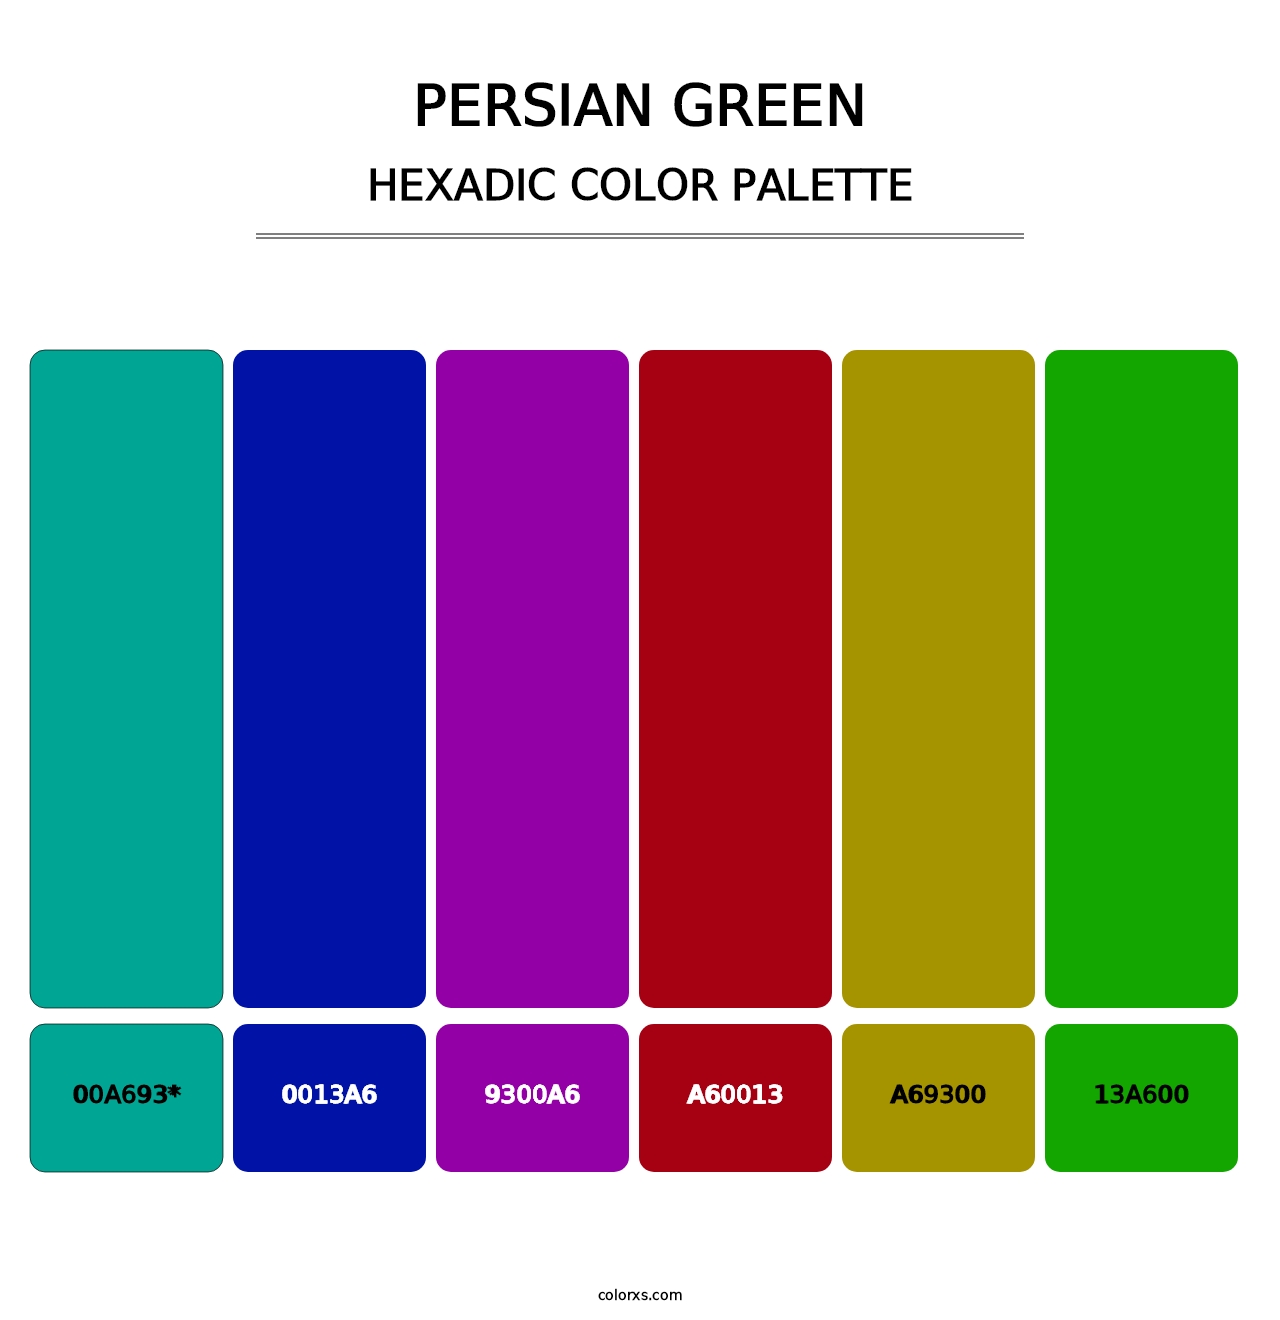 Persian Green - Hexadic Color Palette